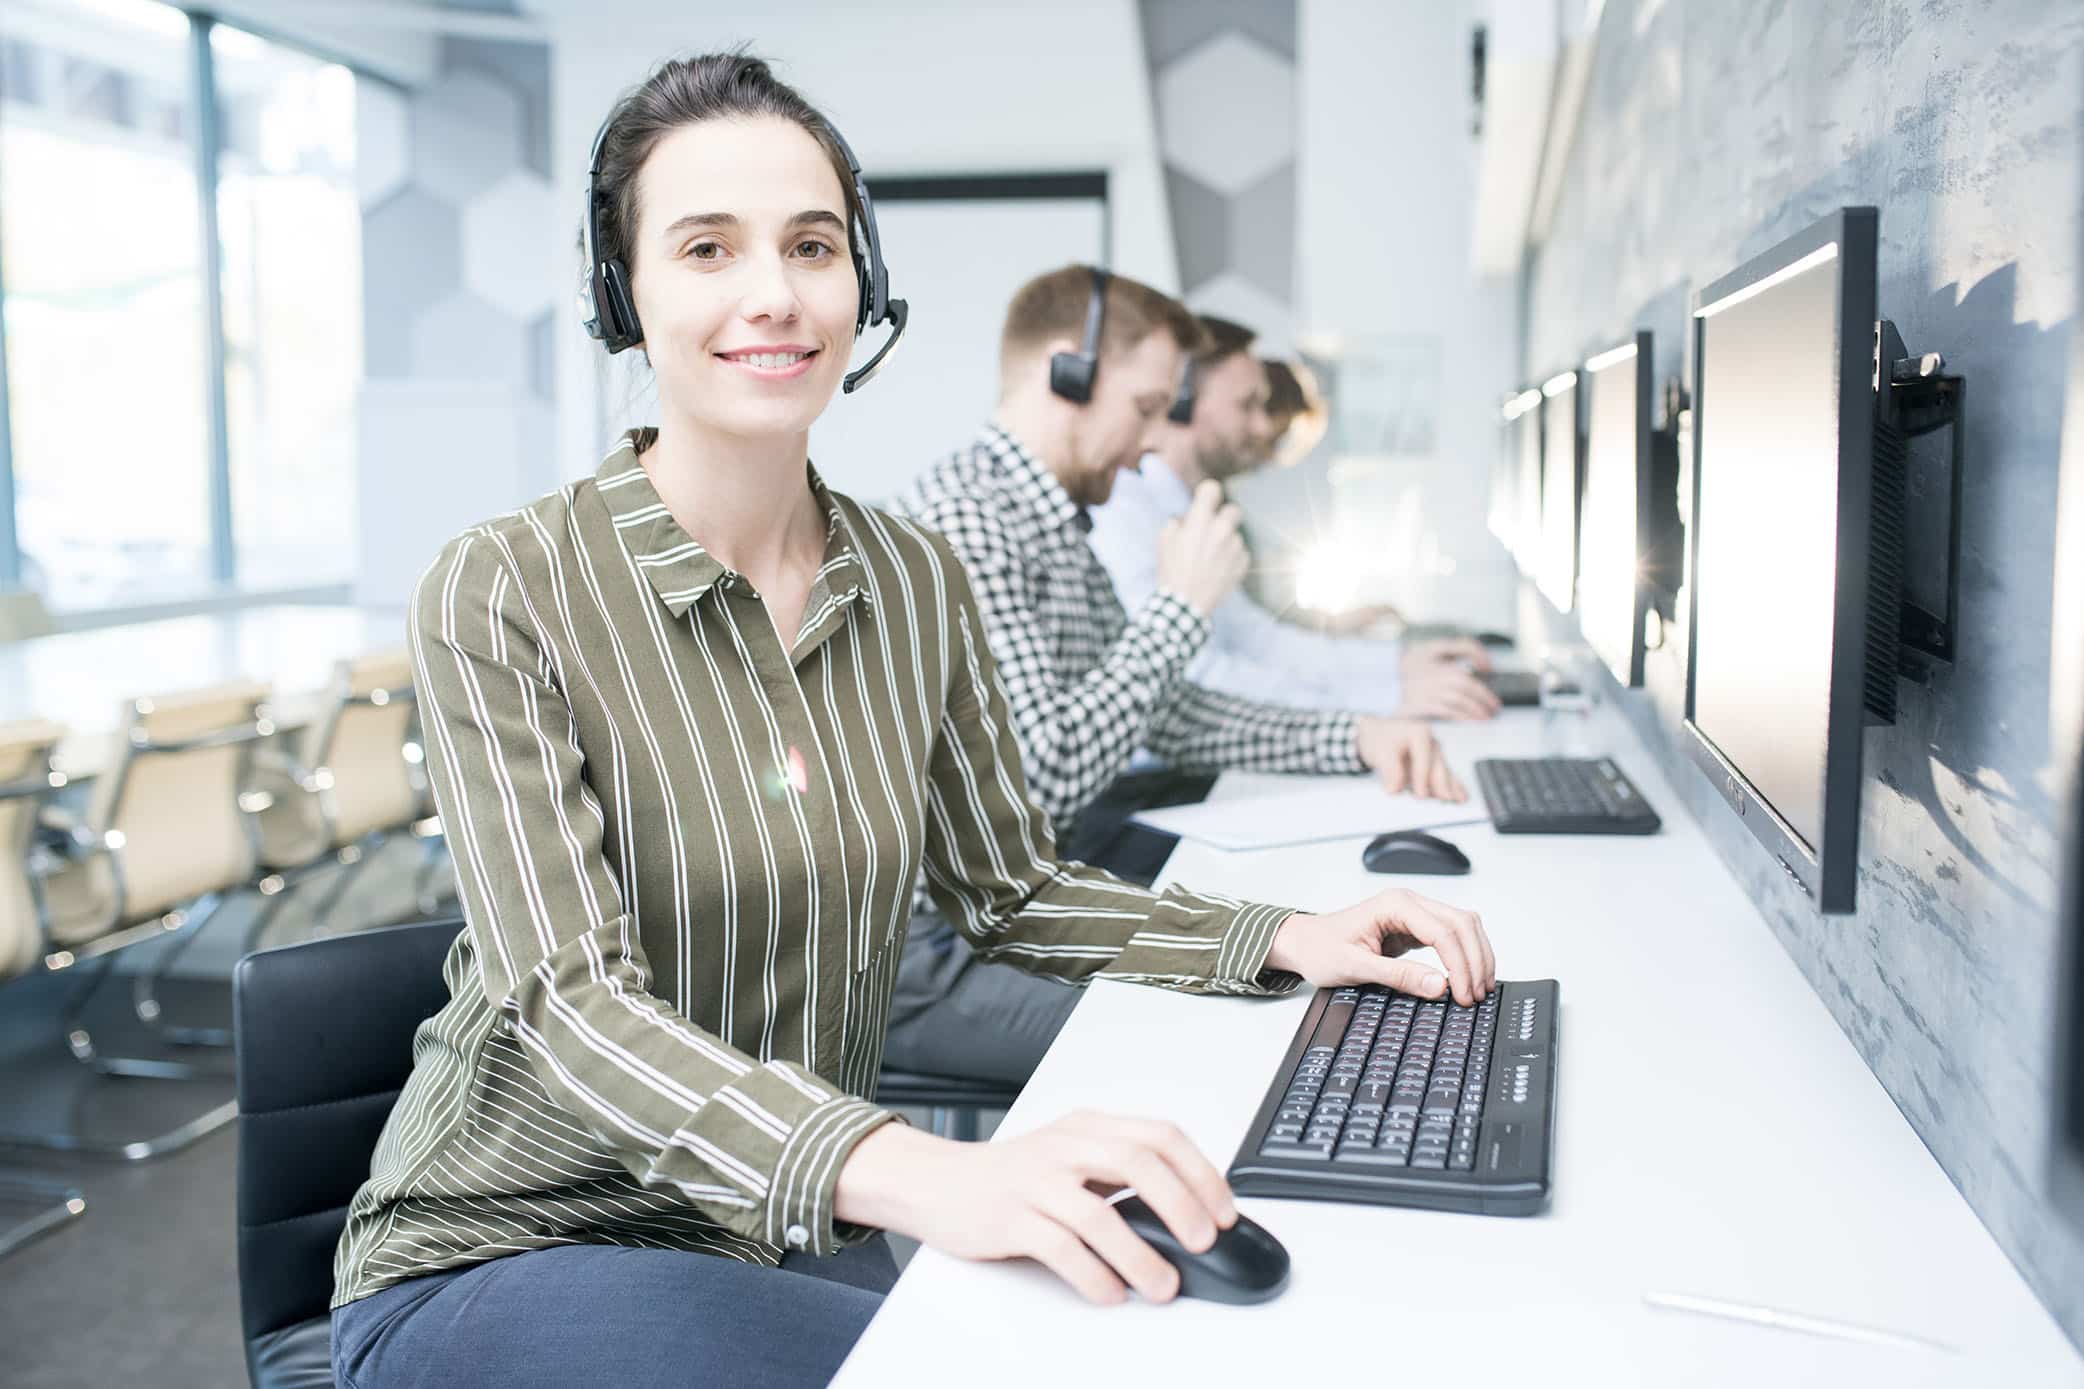 IT Customer support operator wearing headset